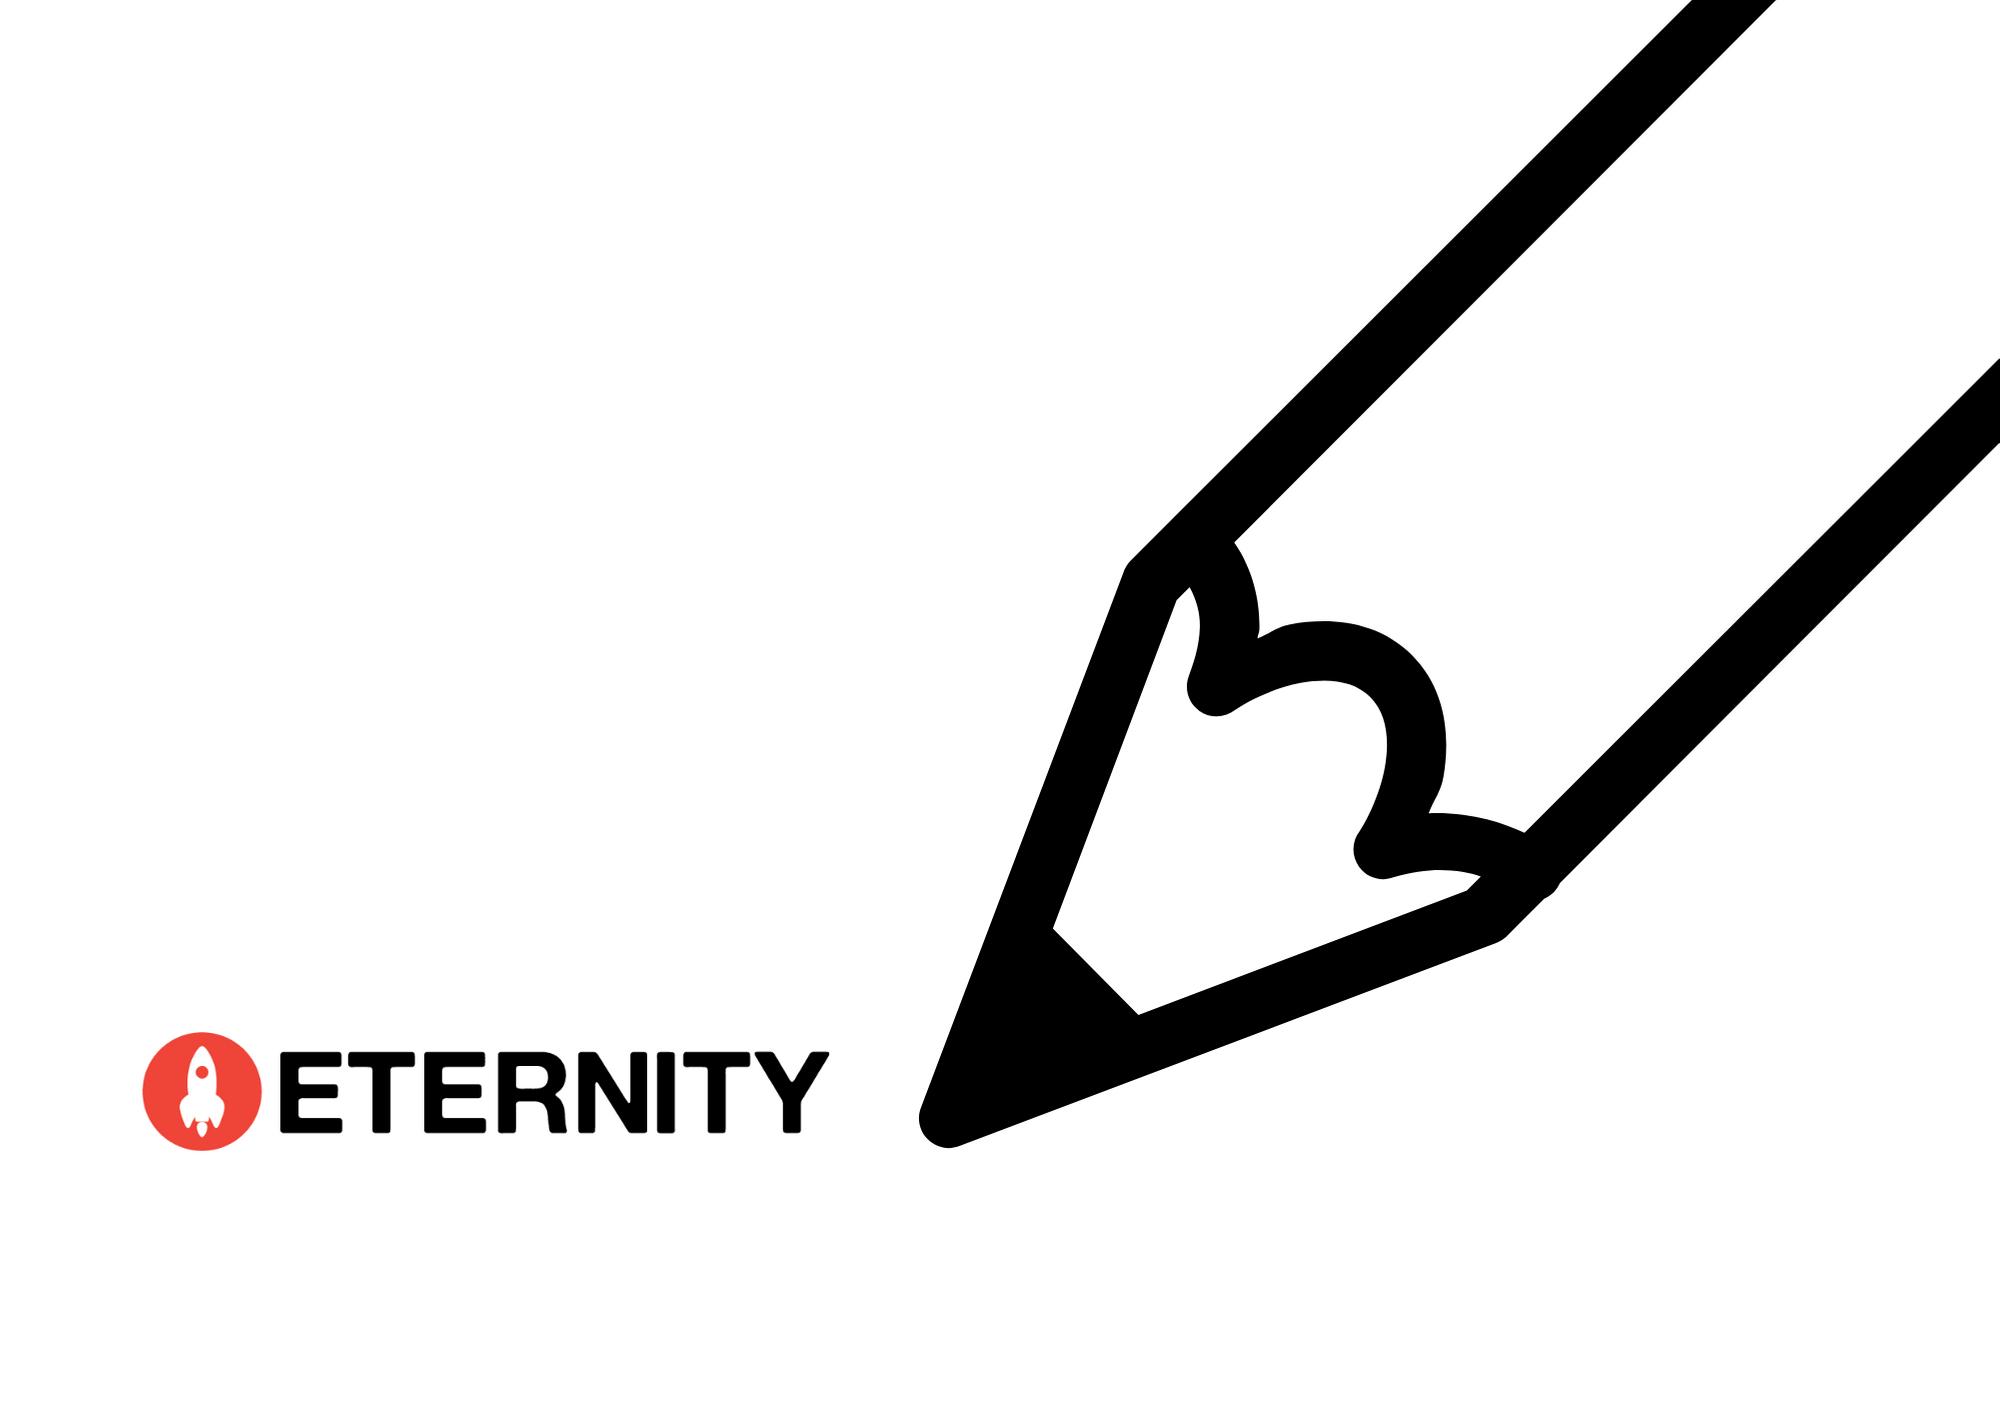 Eternity logo and pencil icon